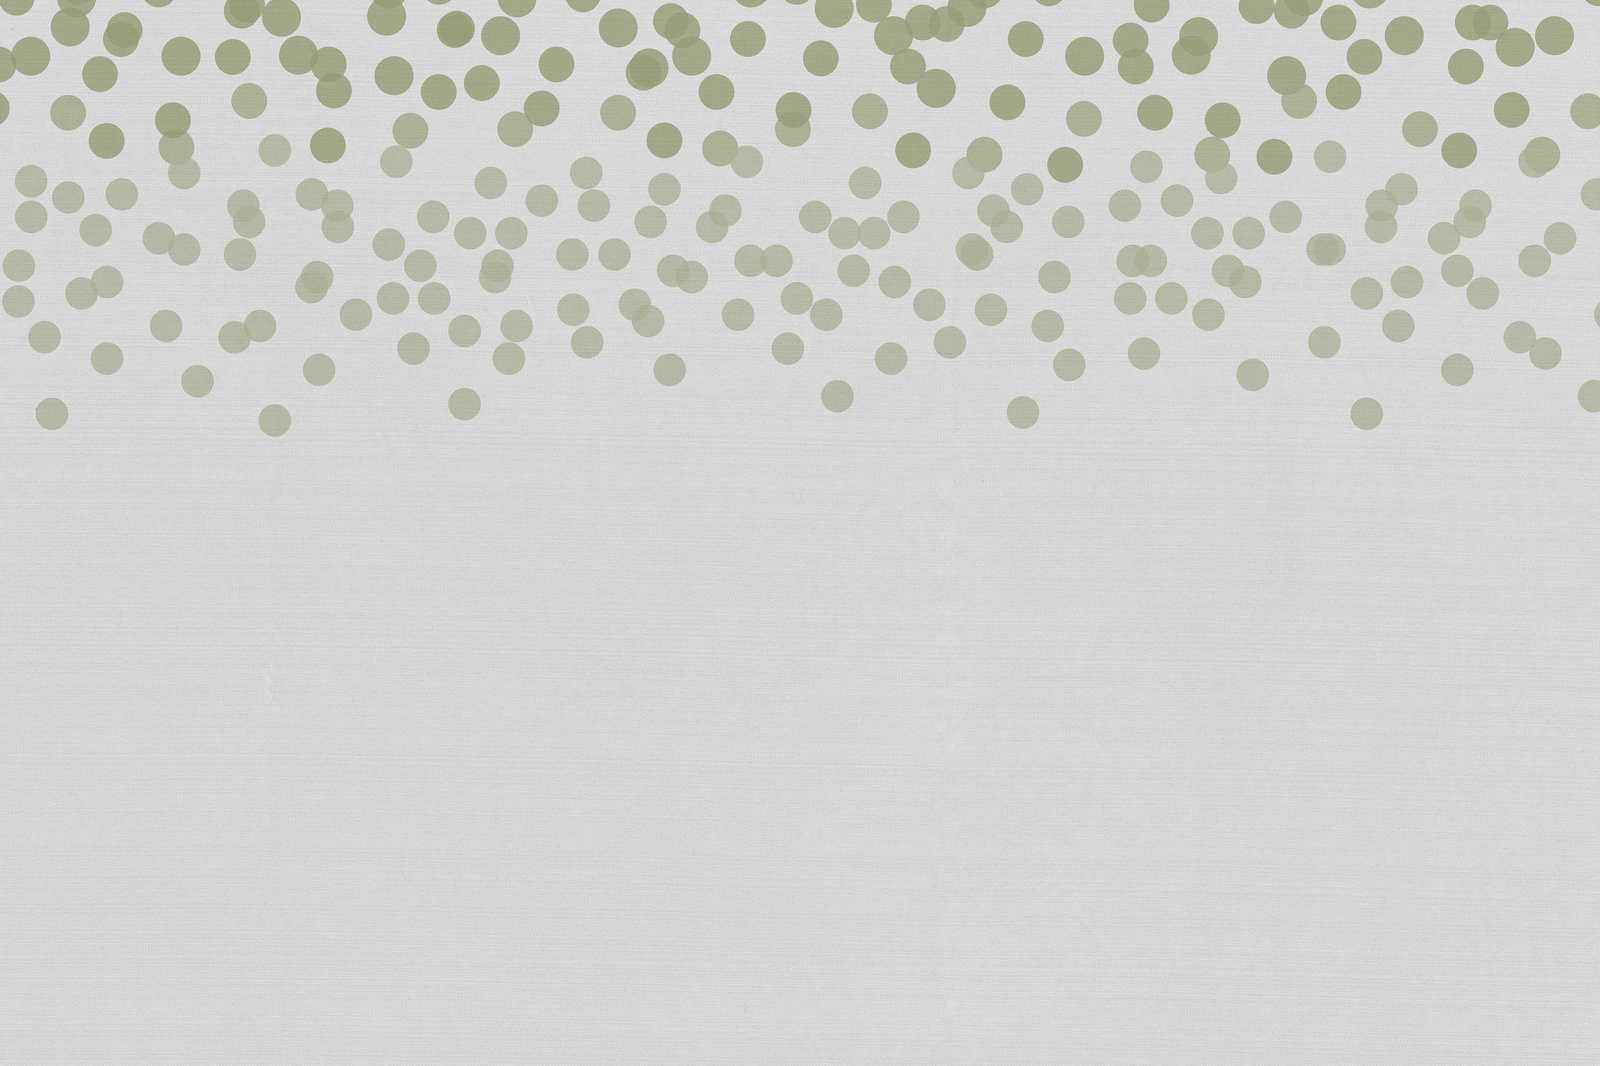             Cuadro en lienzo con discreto motivo de puntos | verde, gris - 0,90 m x 0,60 m
        